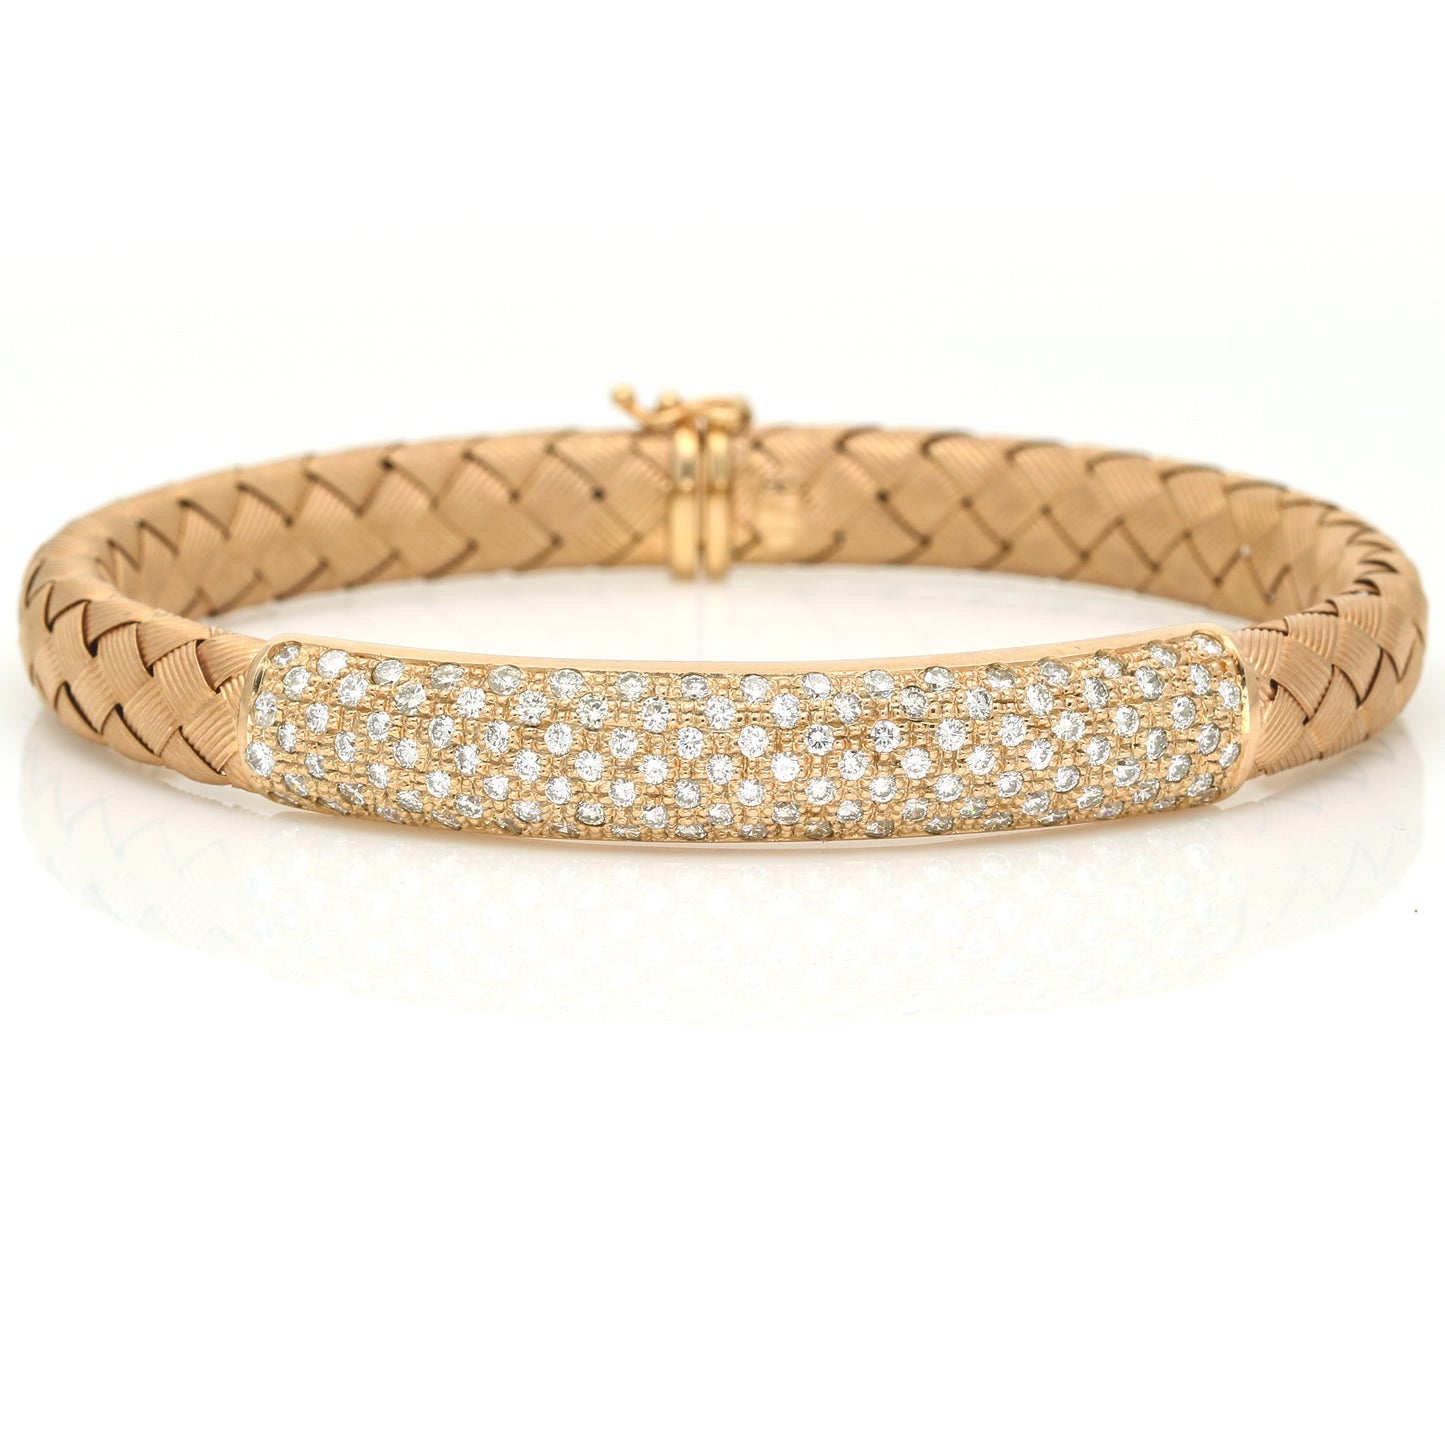 Pave Diamond ID Woven Bracelet in 18k Rose Gold Size Large